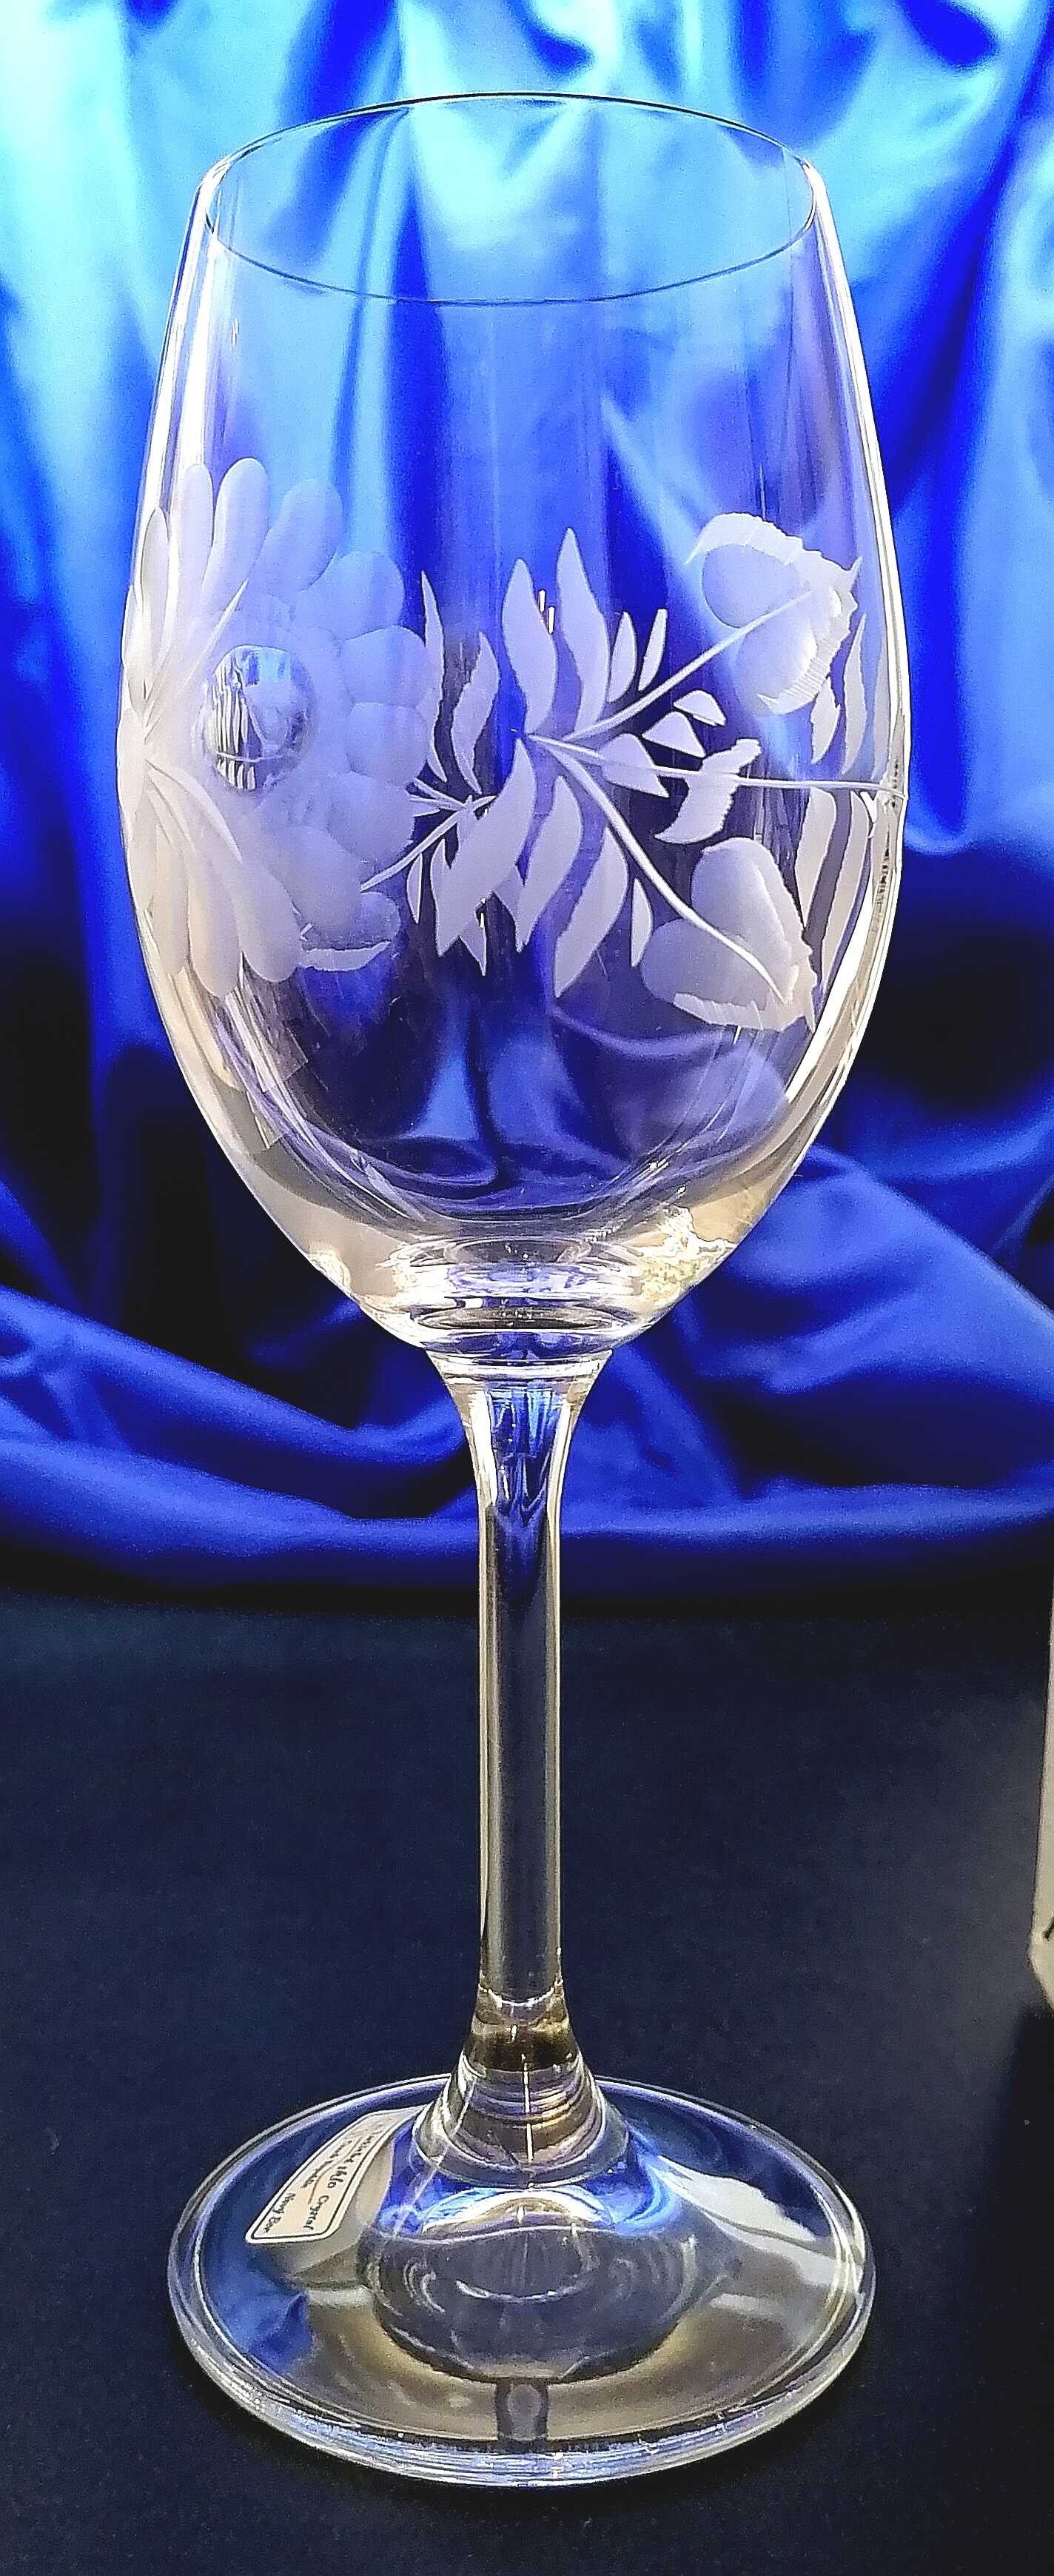 LsG-Kristall Weißwein/Rotwein Kristallgläser Hand geschliffen Alt Gravur Rose WW-189 350ml 4 Stück.